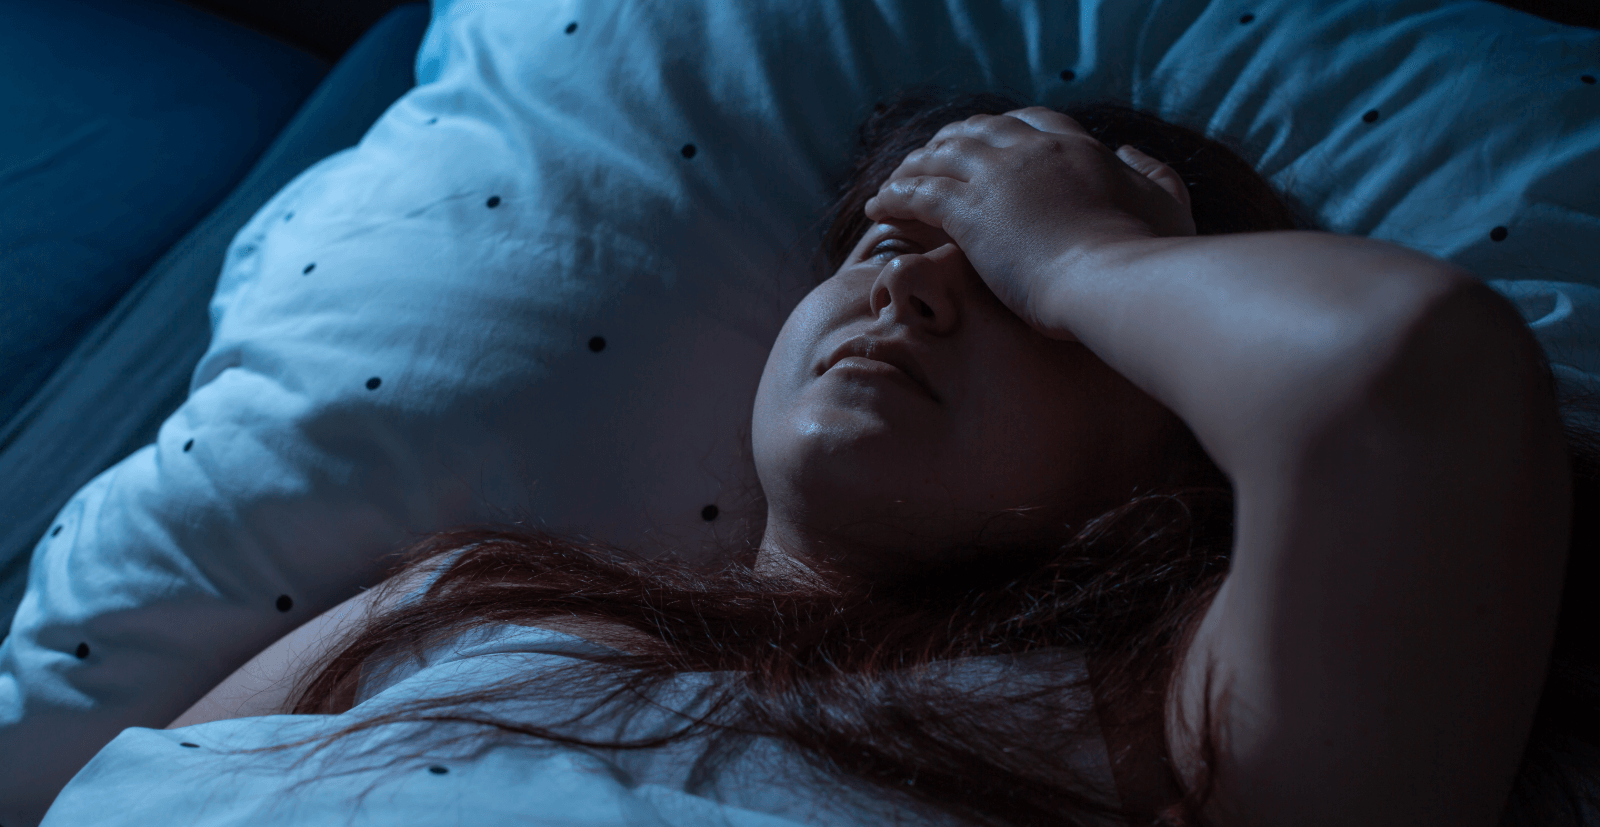 Sleeping With Anxiety